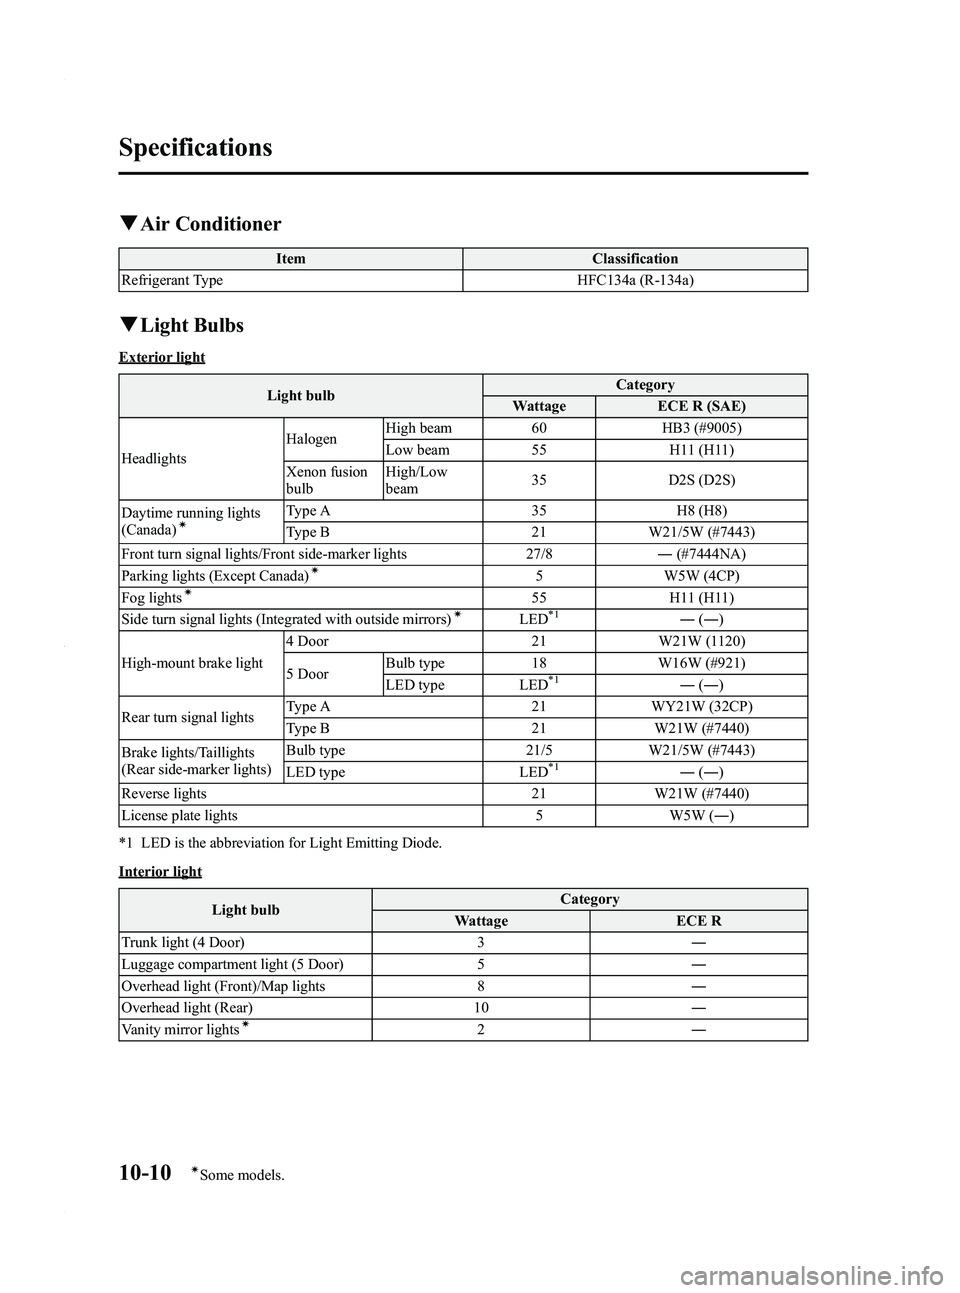 MAZDA MODEL 3 5-DOOR 2012  Owners Manual Black plate (514,1)
qAir Conditioner
Item Classification
Refrigerant Type HFC134a (R-134a)
qLight Bulbs
Exterior light
Light bulb Category
Wattage ECE R (SAE)
Headlights Halogen
High beam 60 HB3 (#900